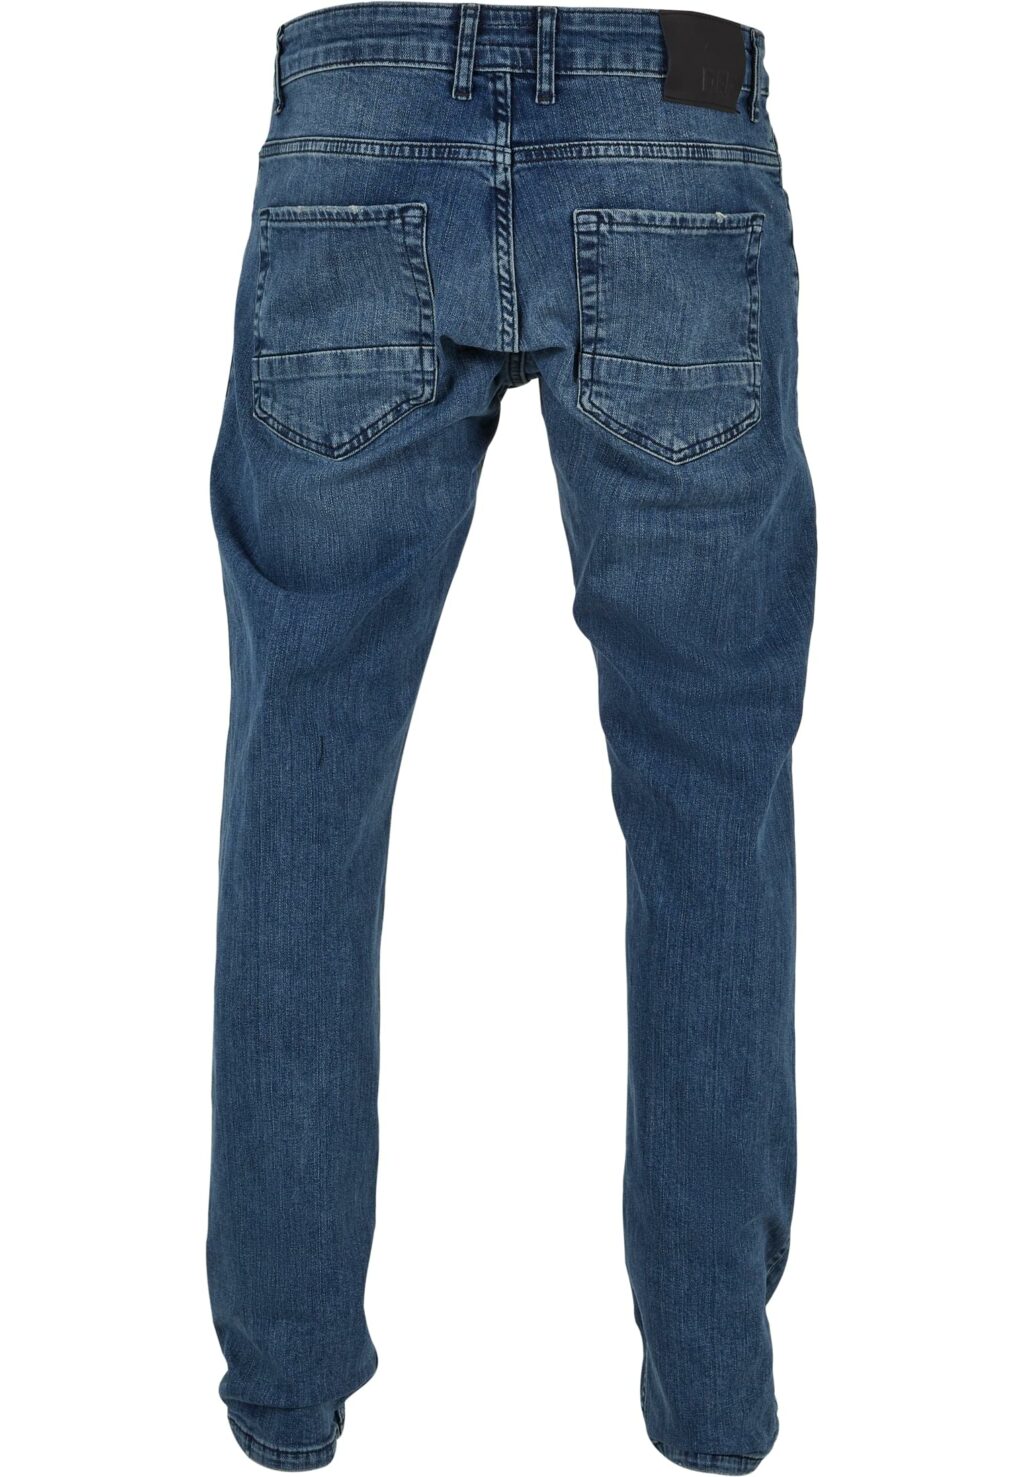 Skom Slim Fit Jeans Washed denimblue DFJS102